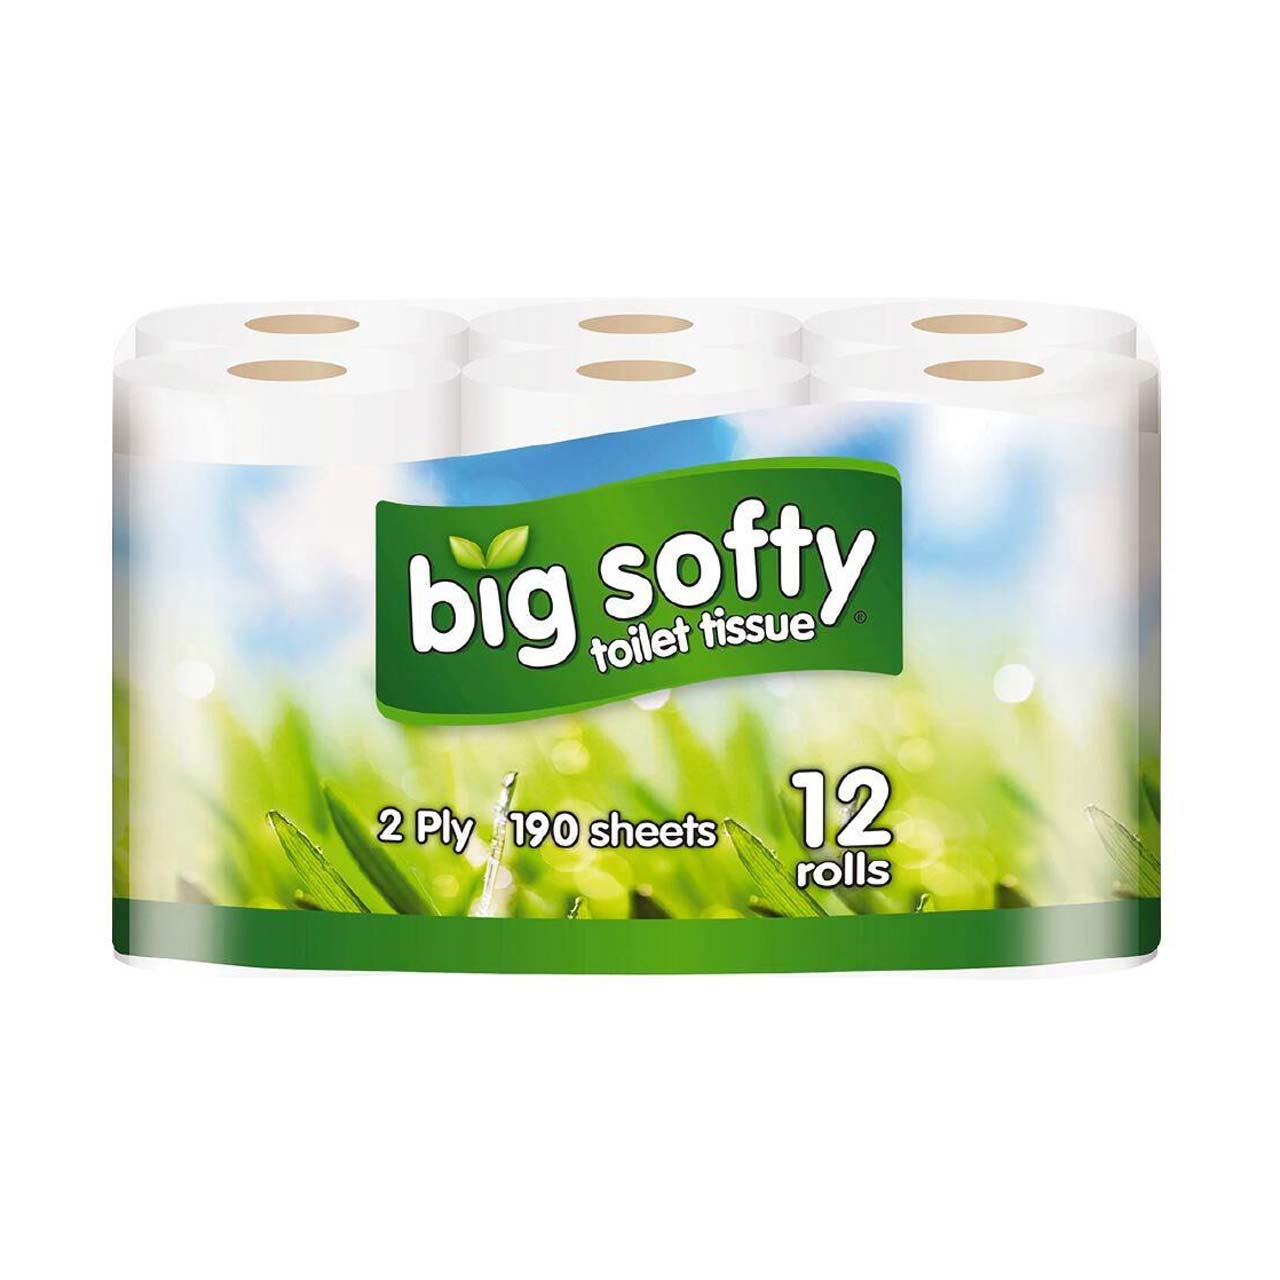 Big-Softy-Toilet-Rolls-12-pack